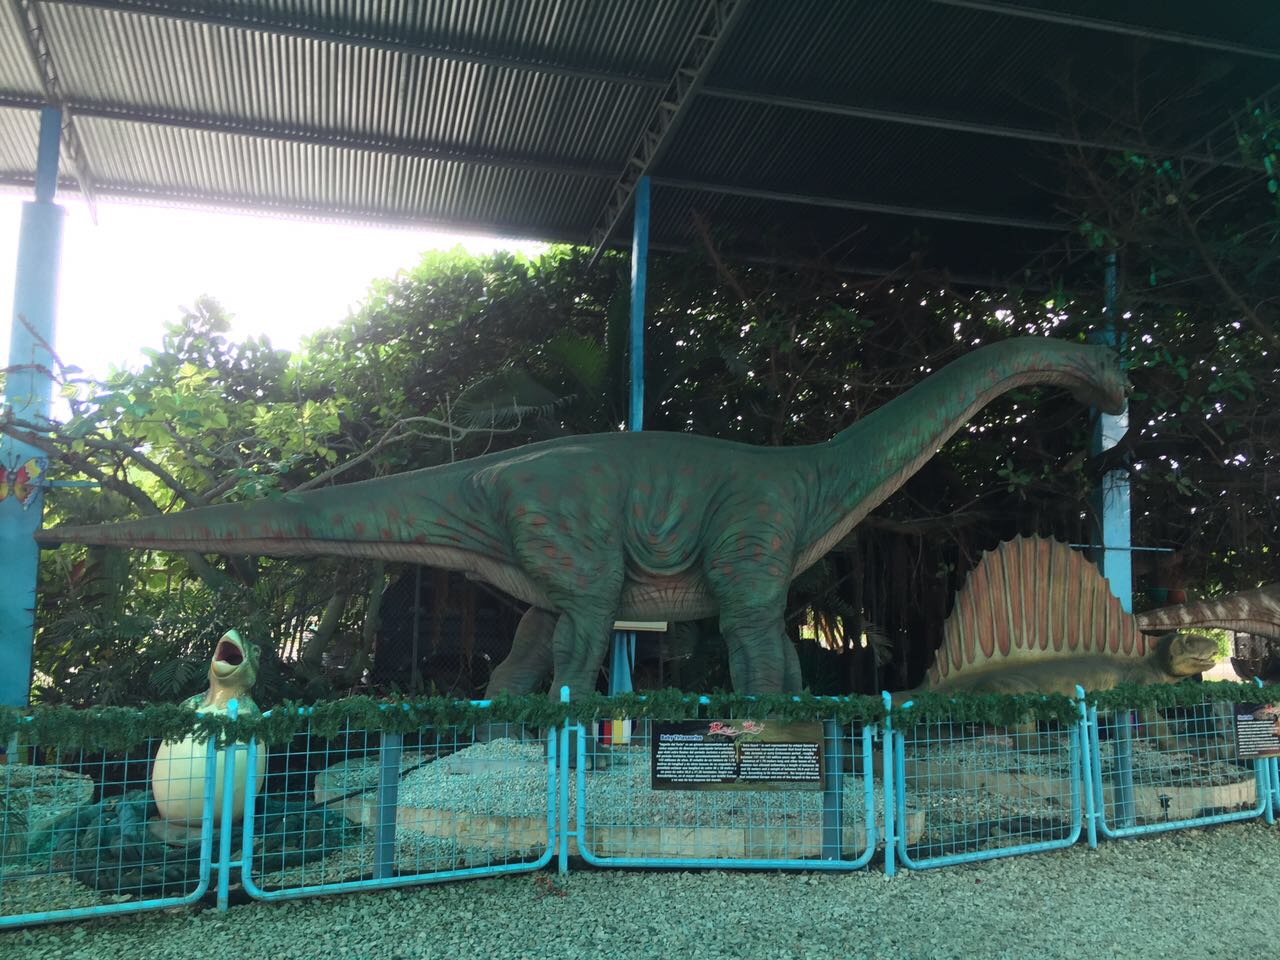 4.Prehistoric Adventure at Ecuador's Jurassic Dinosaur Theme Water Park (3).JPG